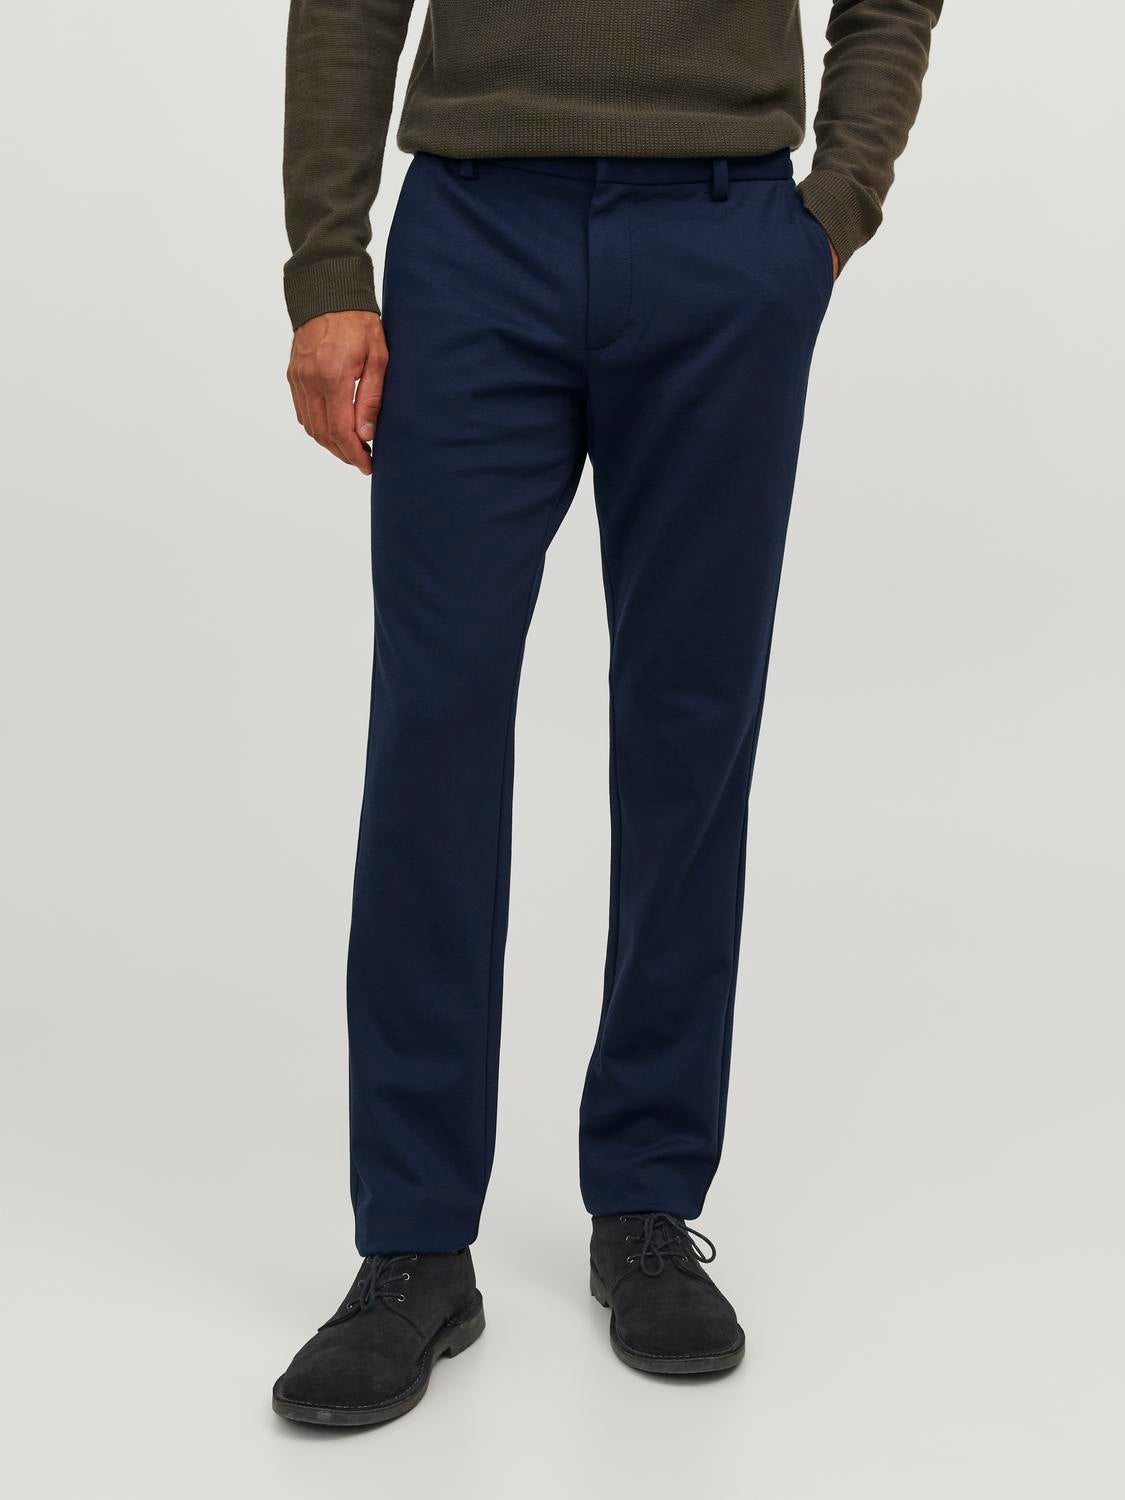 The Navy Richmond Chino Custom Pant – Ledbury